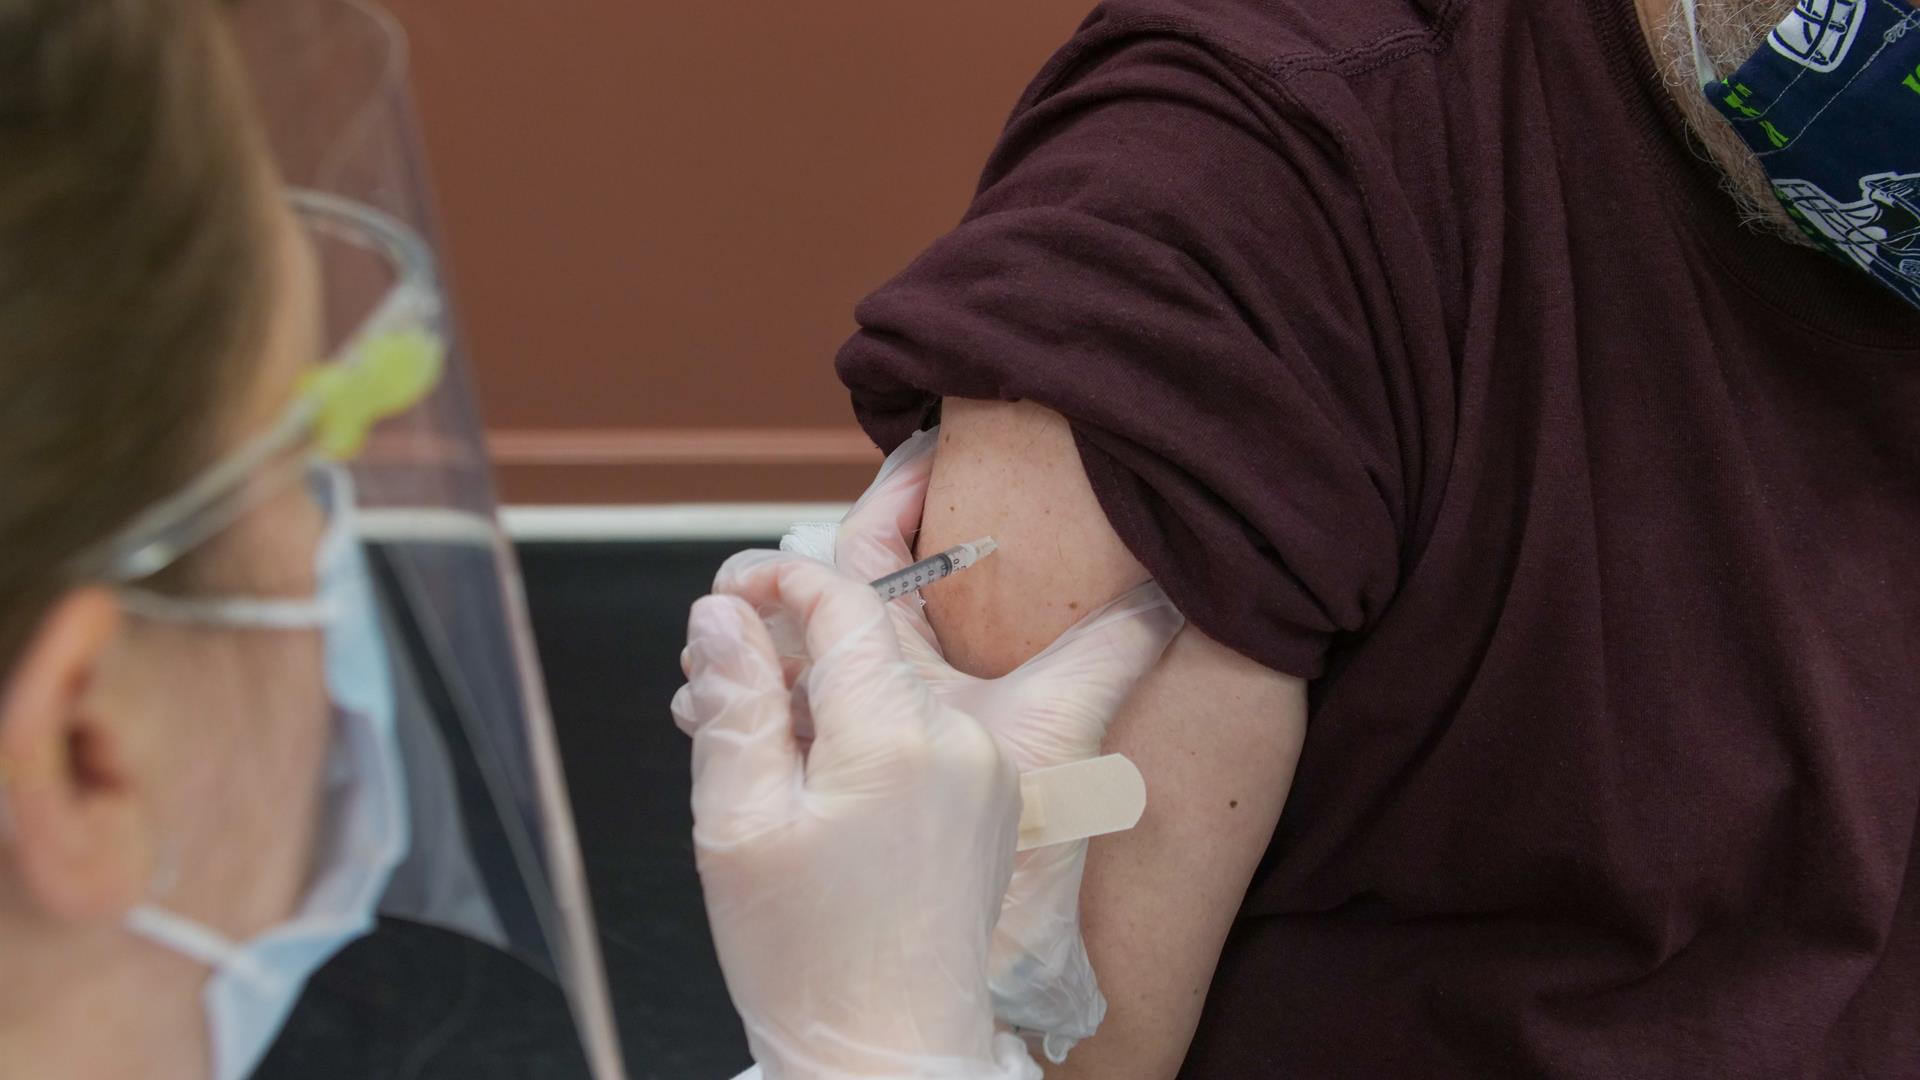 Steven Cornfield Vaccination Unsplash